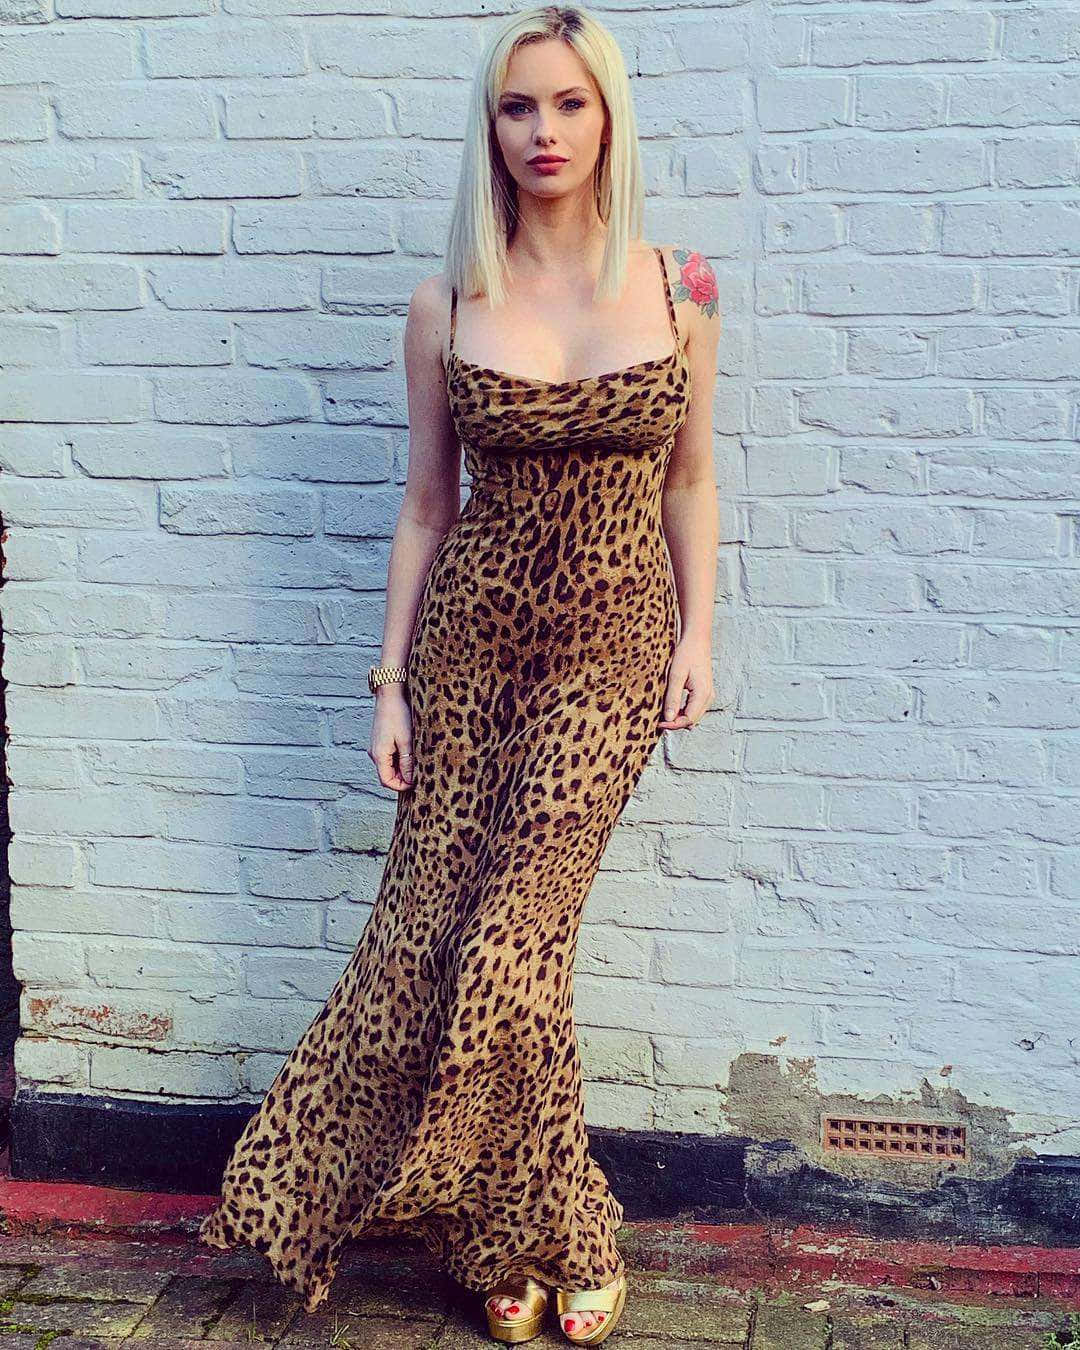 Elegant Leopard Print Gown Woman Wallpaper